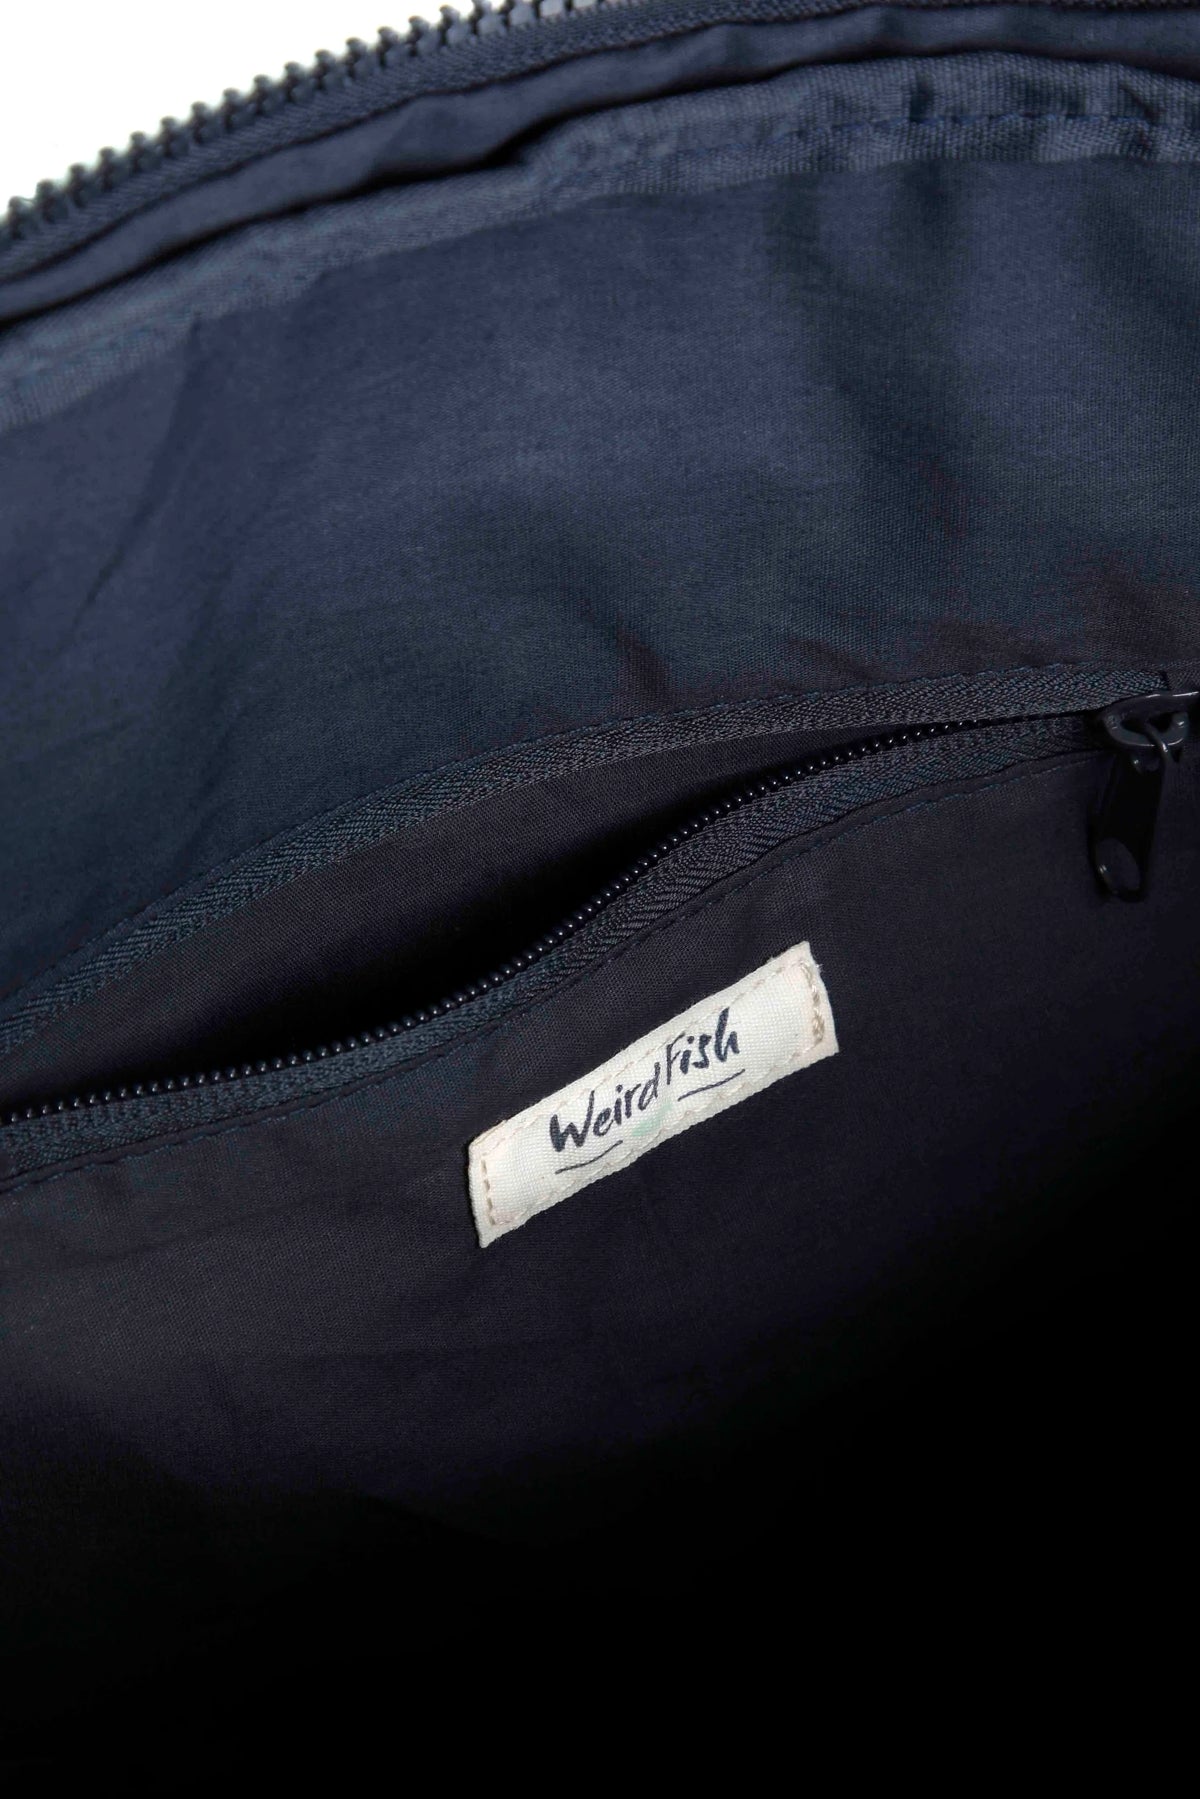 Nahla sketch style dog print backpack bag from Weird Fish in Dark Jade Green with internal zip pocket.